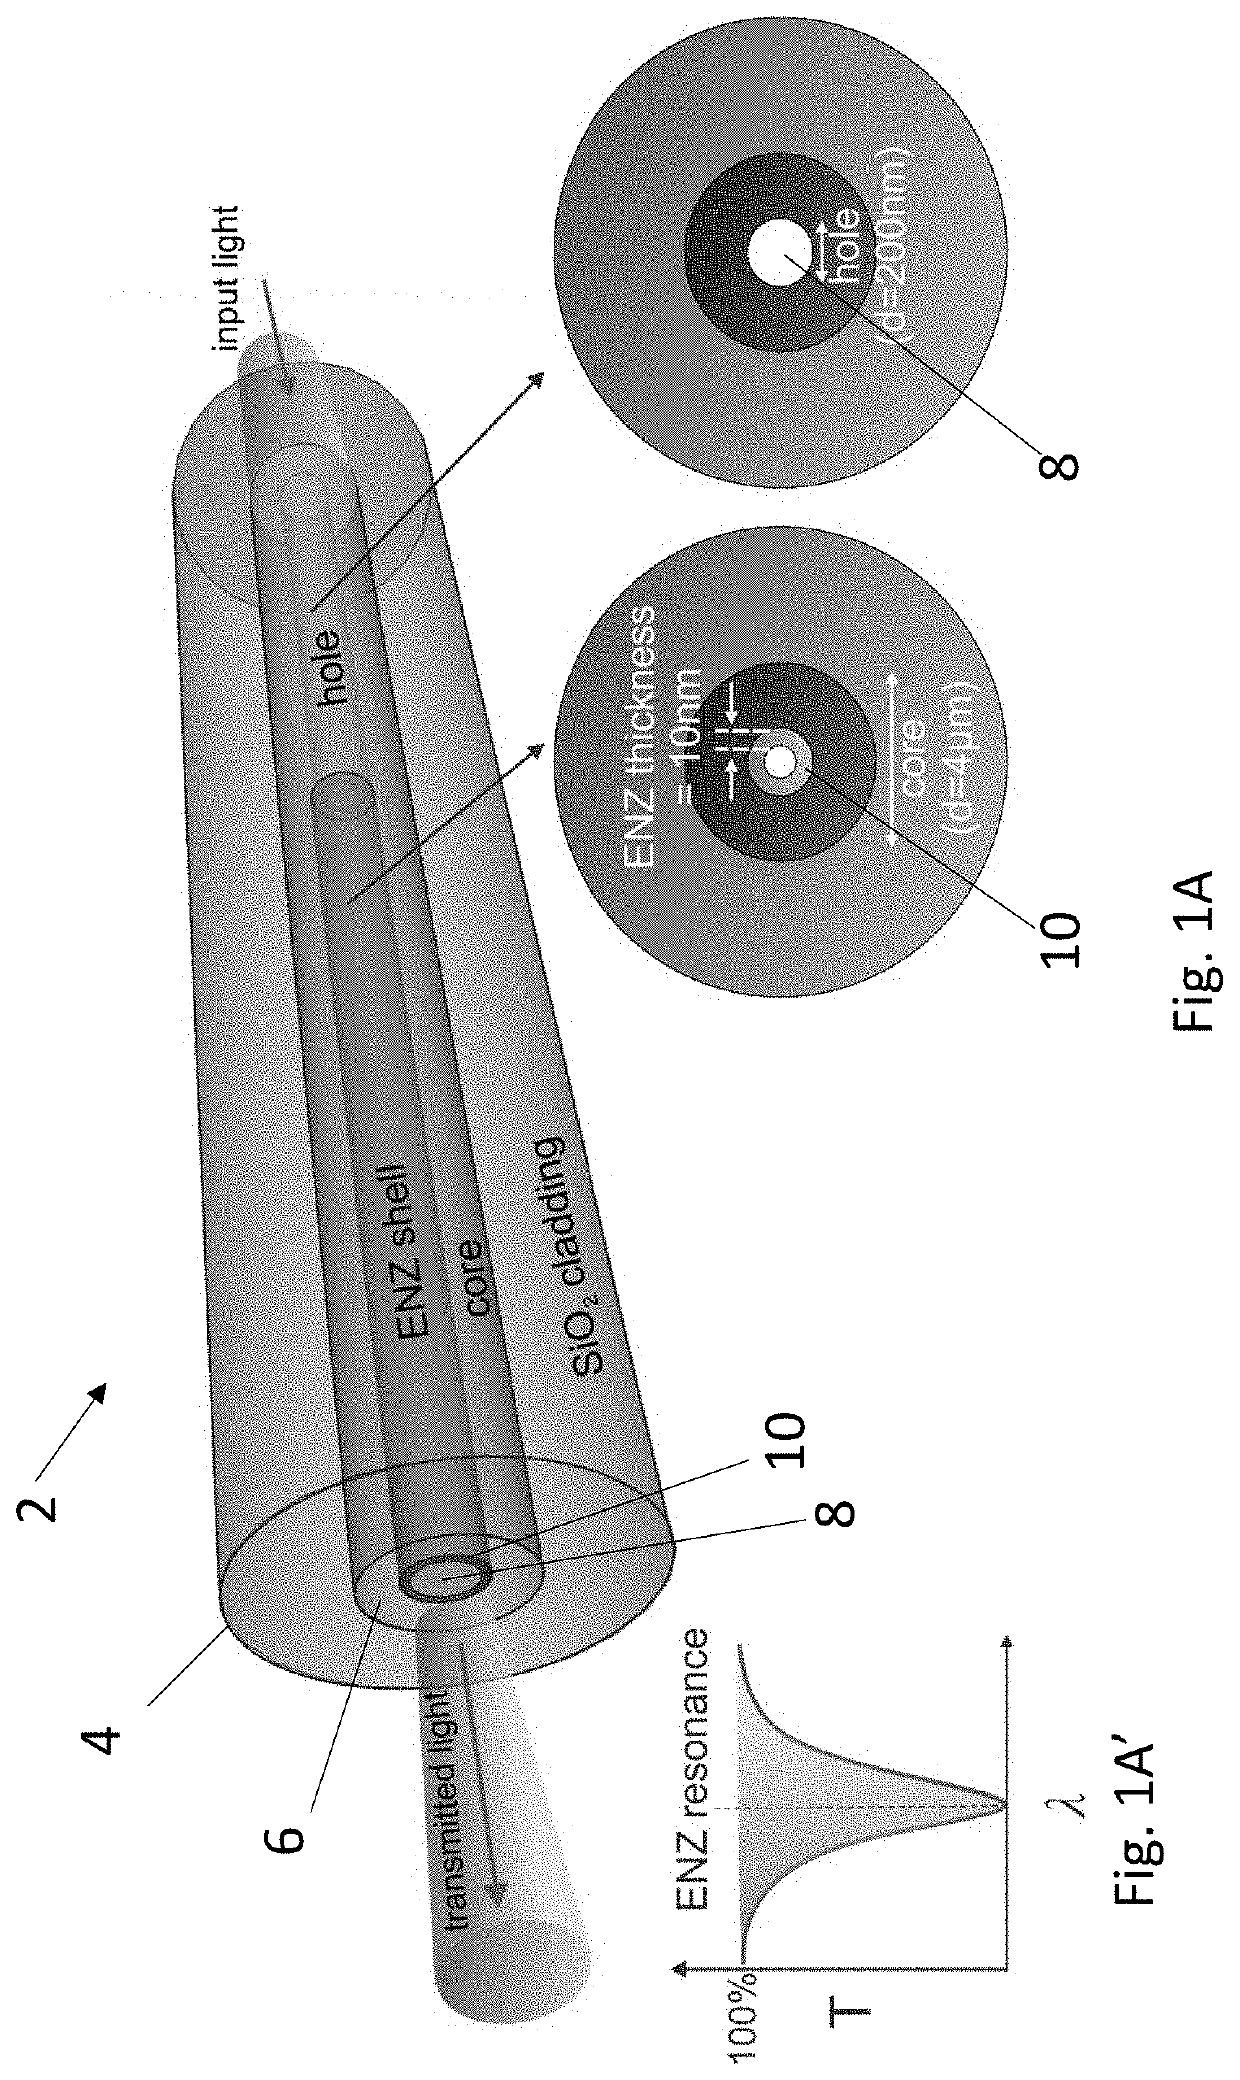 Integrated Optical Fiber and Epsilon-Near-Zero Material